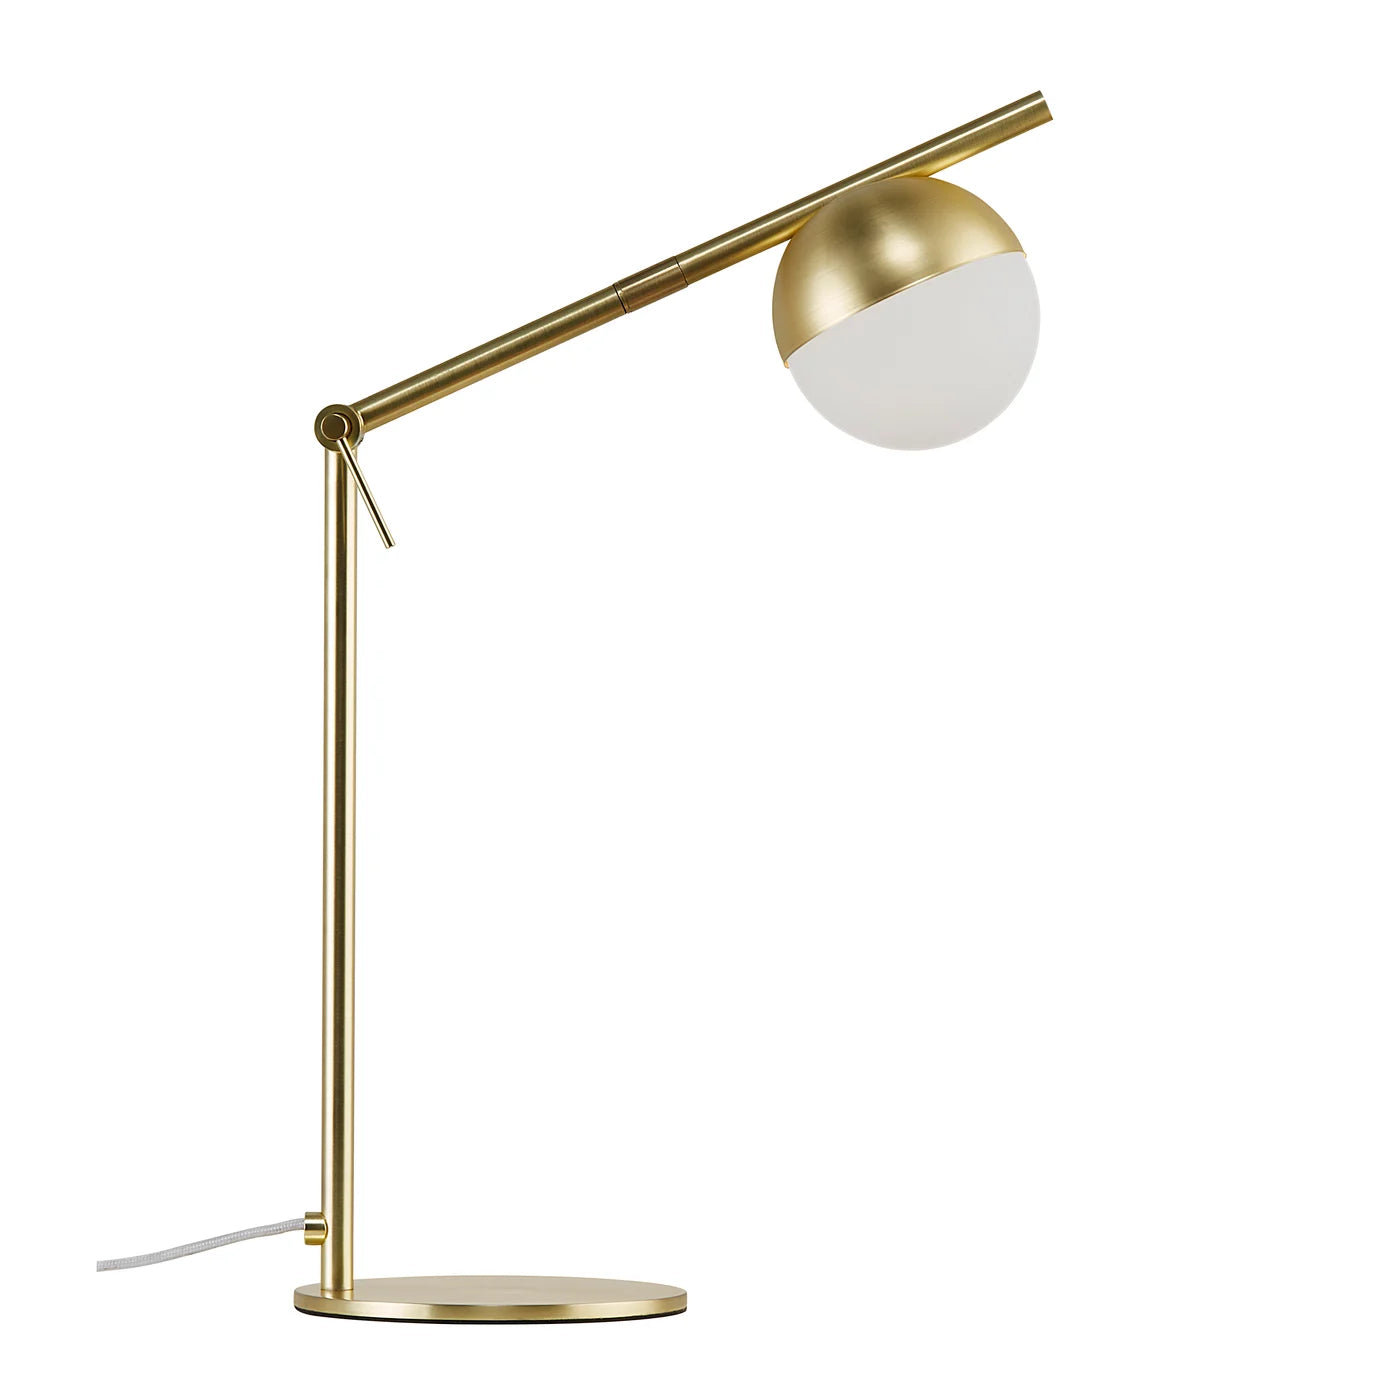 CONTINA brass table lamp